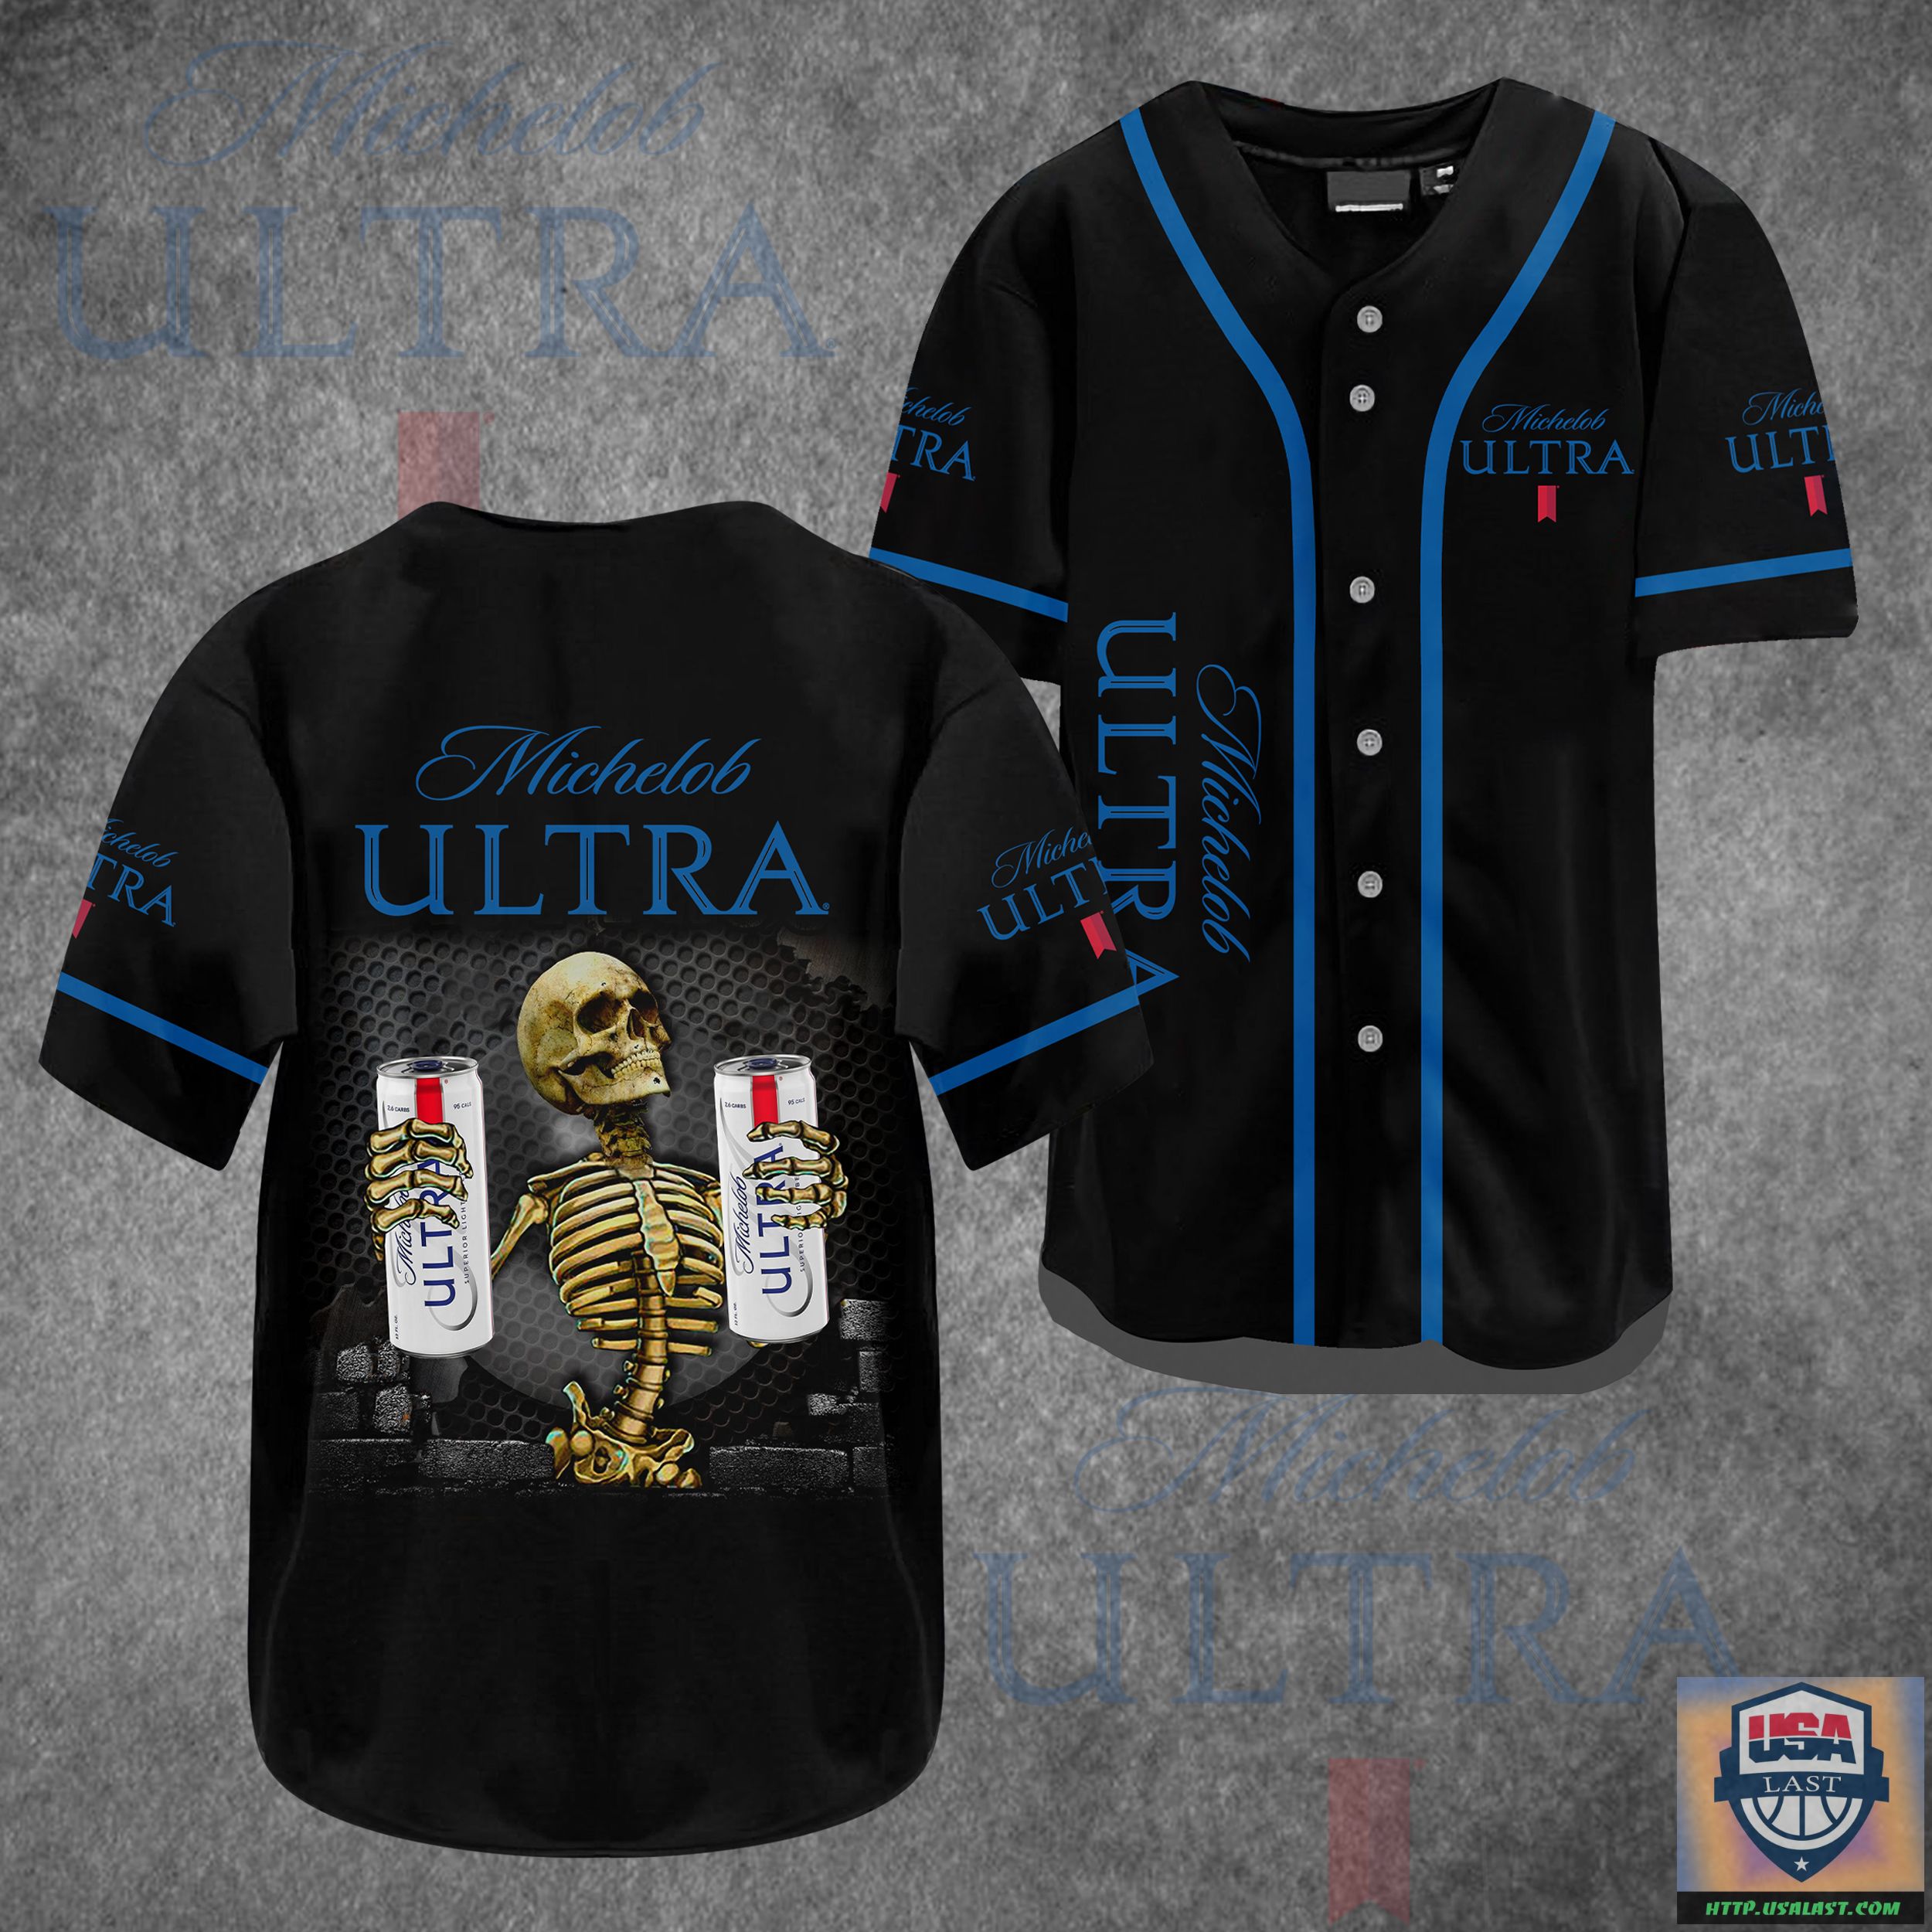 Michelob Ultra Skull Baseball Jersey Shirt – Usalast